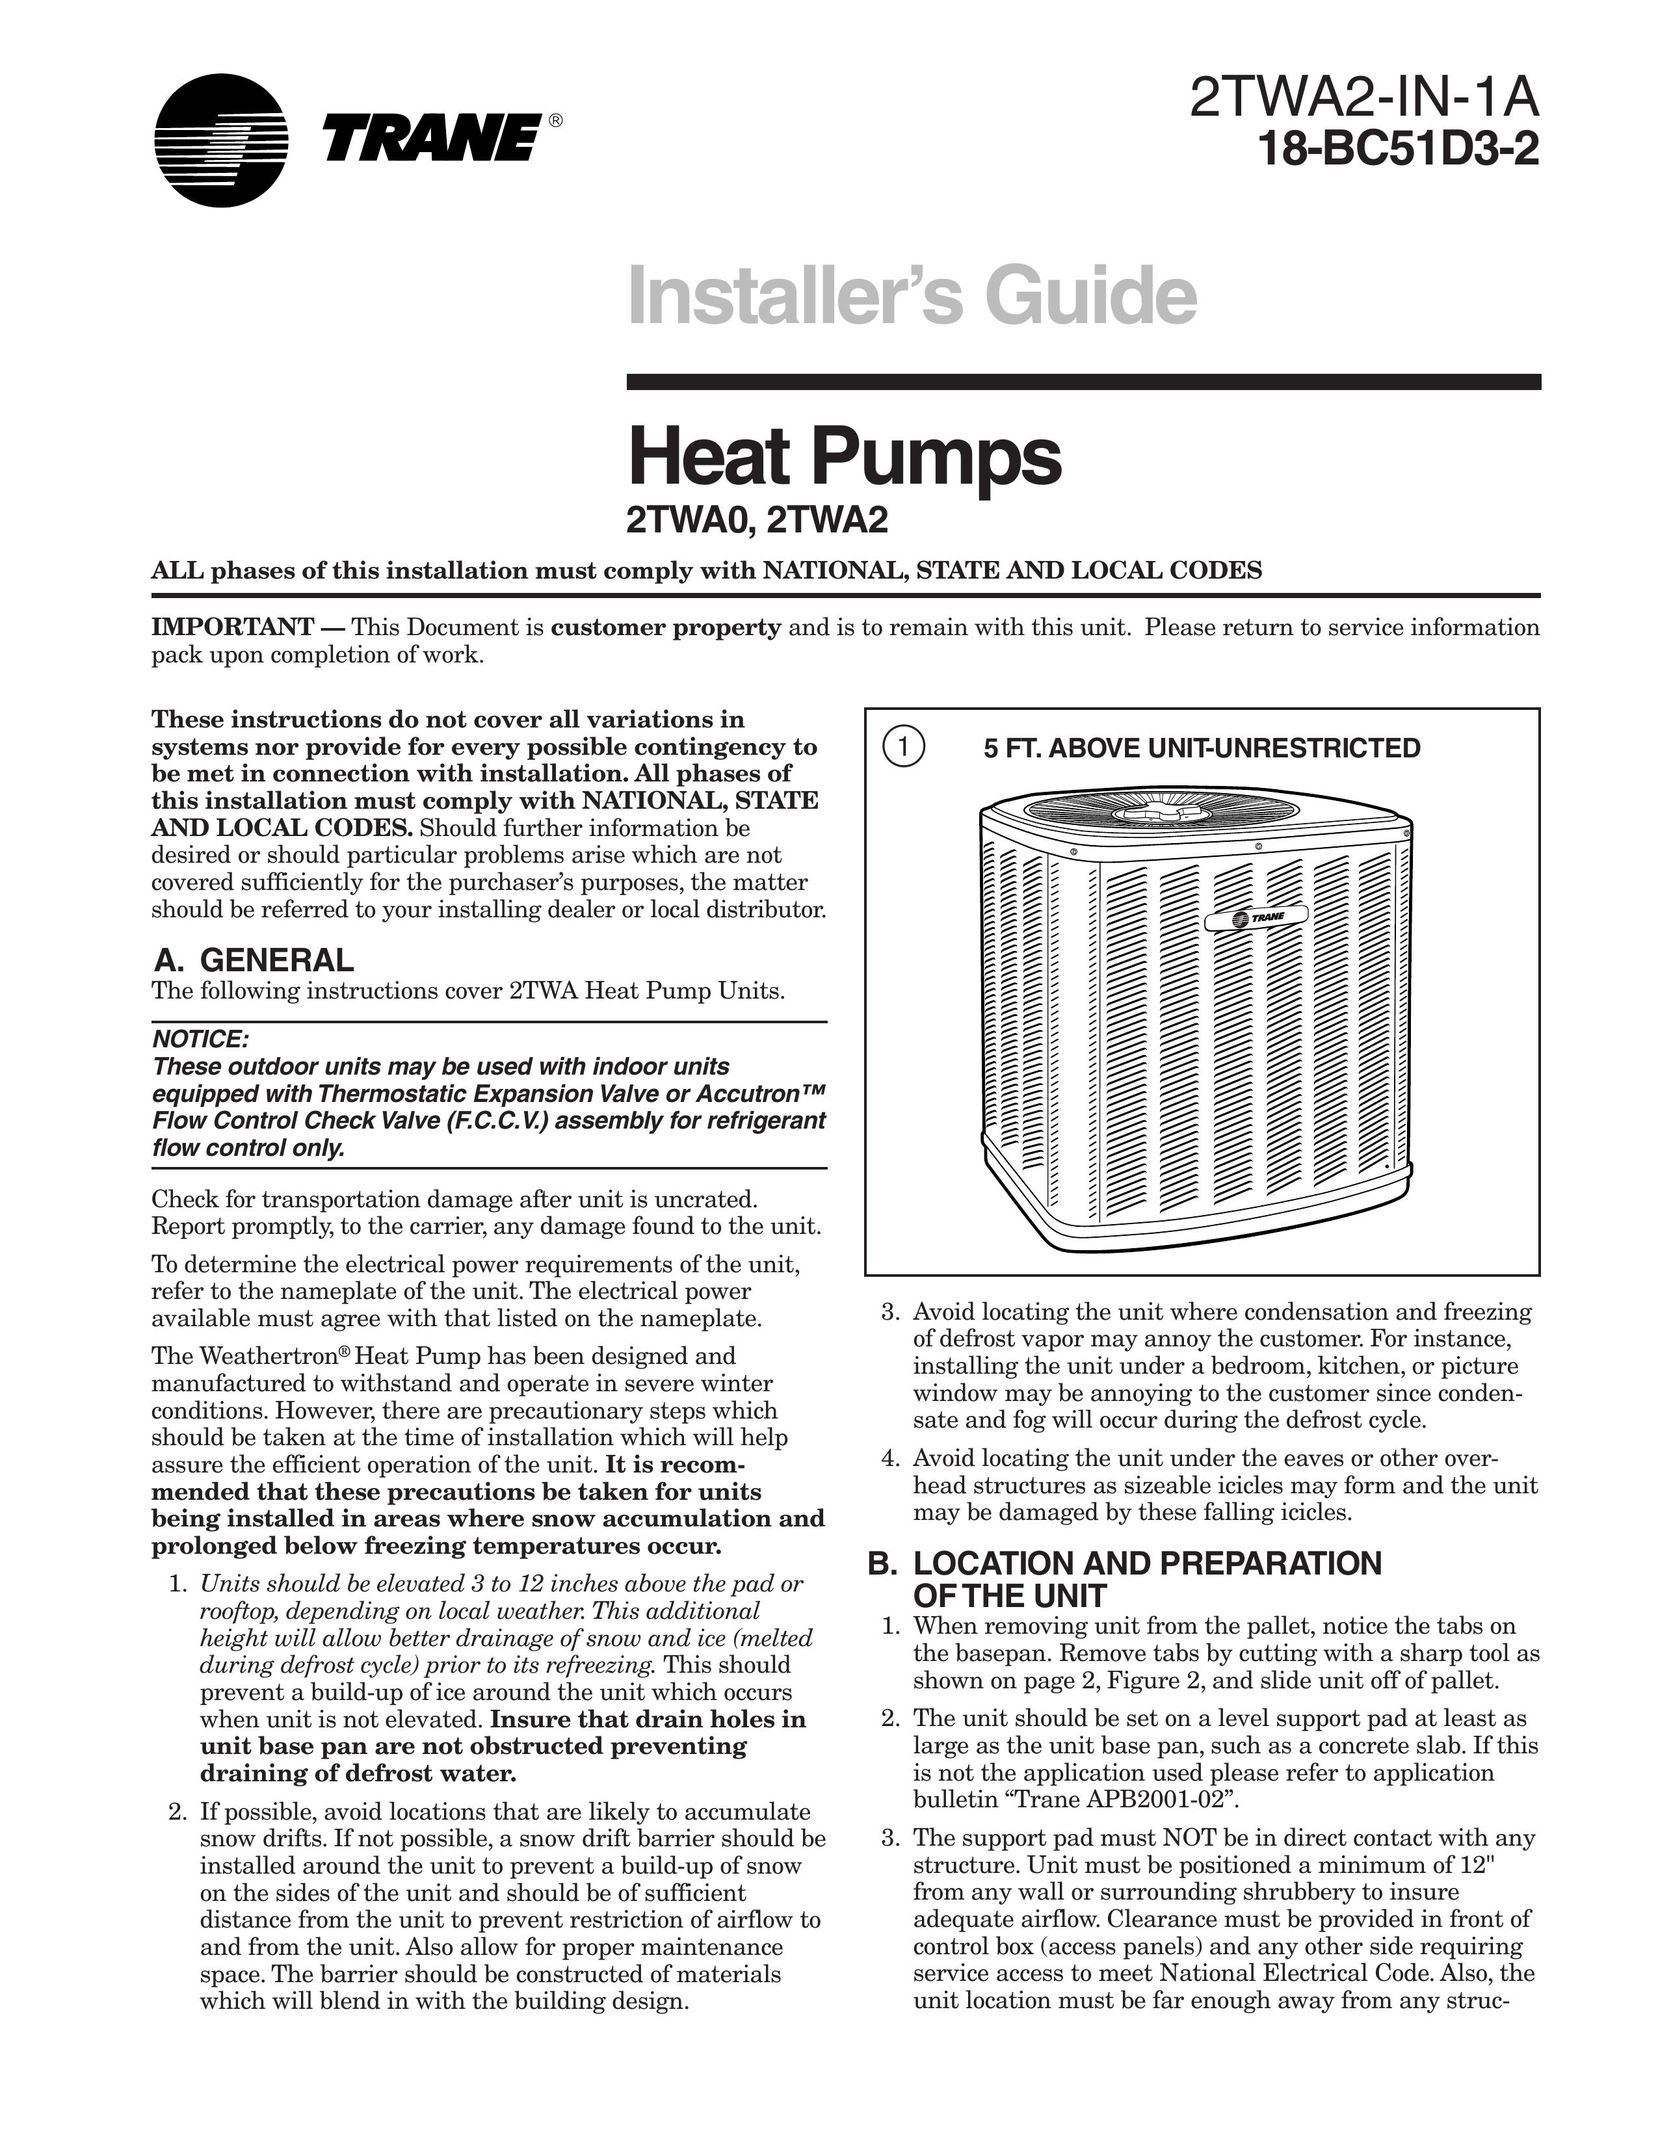 Trane 2TWA0 Heat Pump User Manual